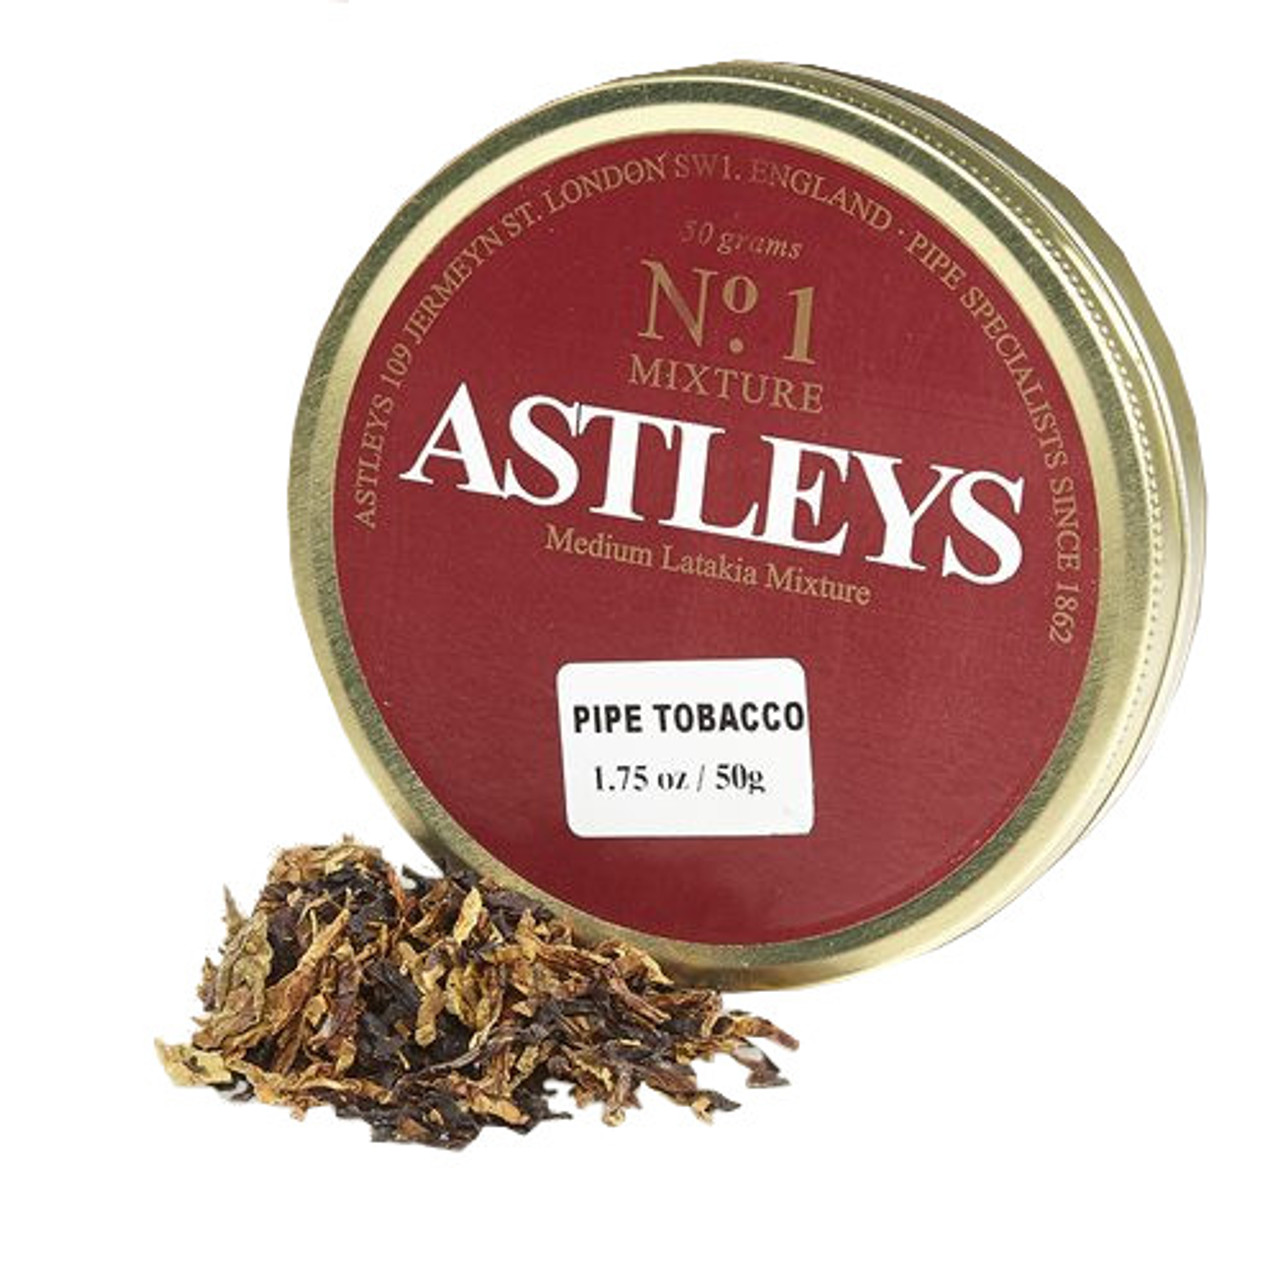 Astleys No. 1 Mixture Pipe Tobacco | 1.75 OZ TIN